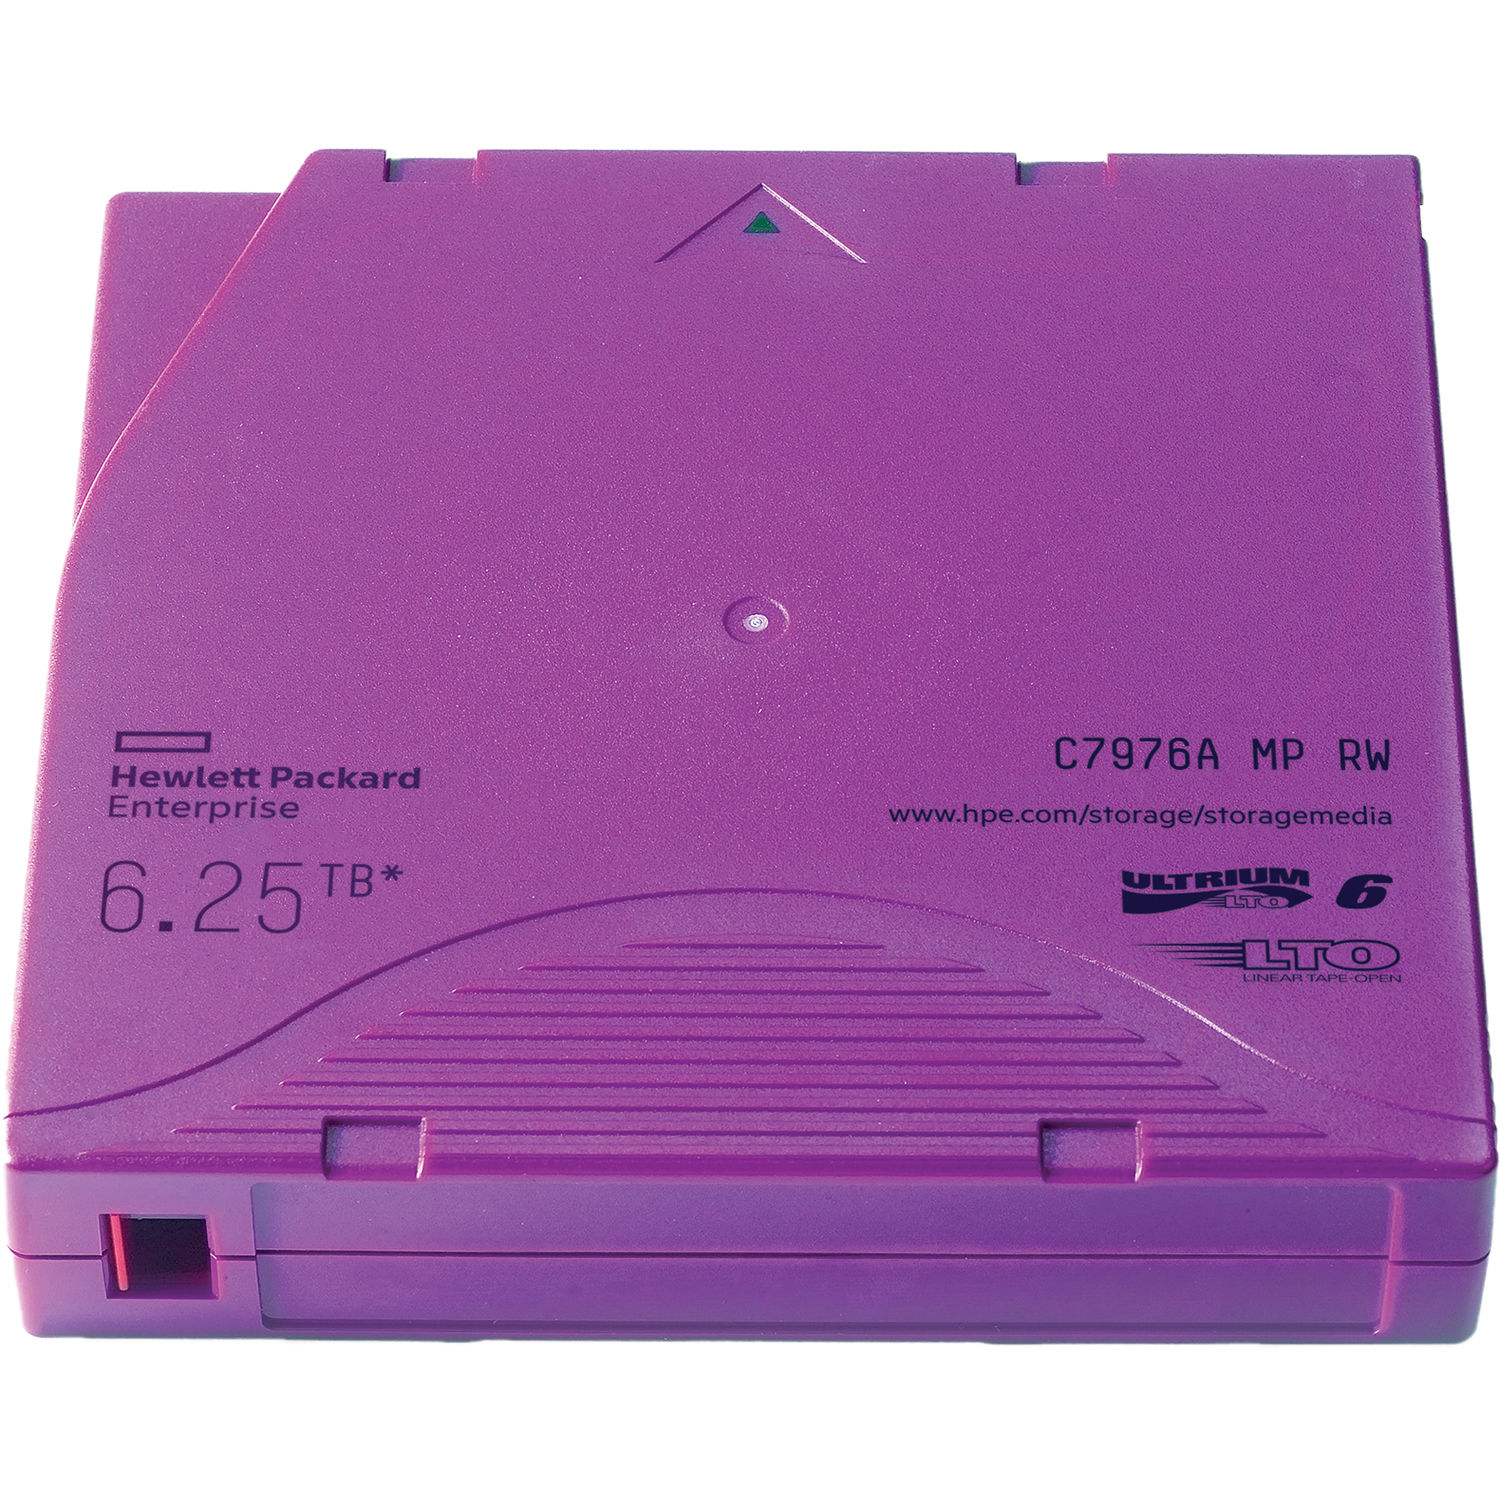 Hewlett Packard Enterprises 6.25TB LTO-6 Ultrium RW Data Cartridge (Purple)